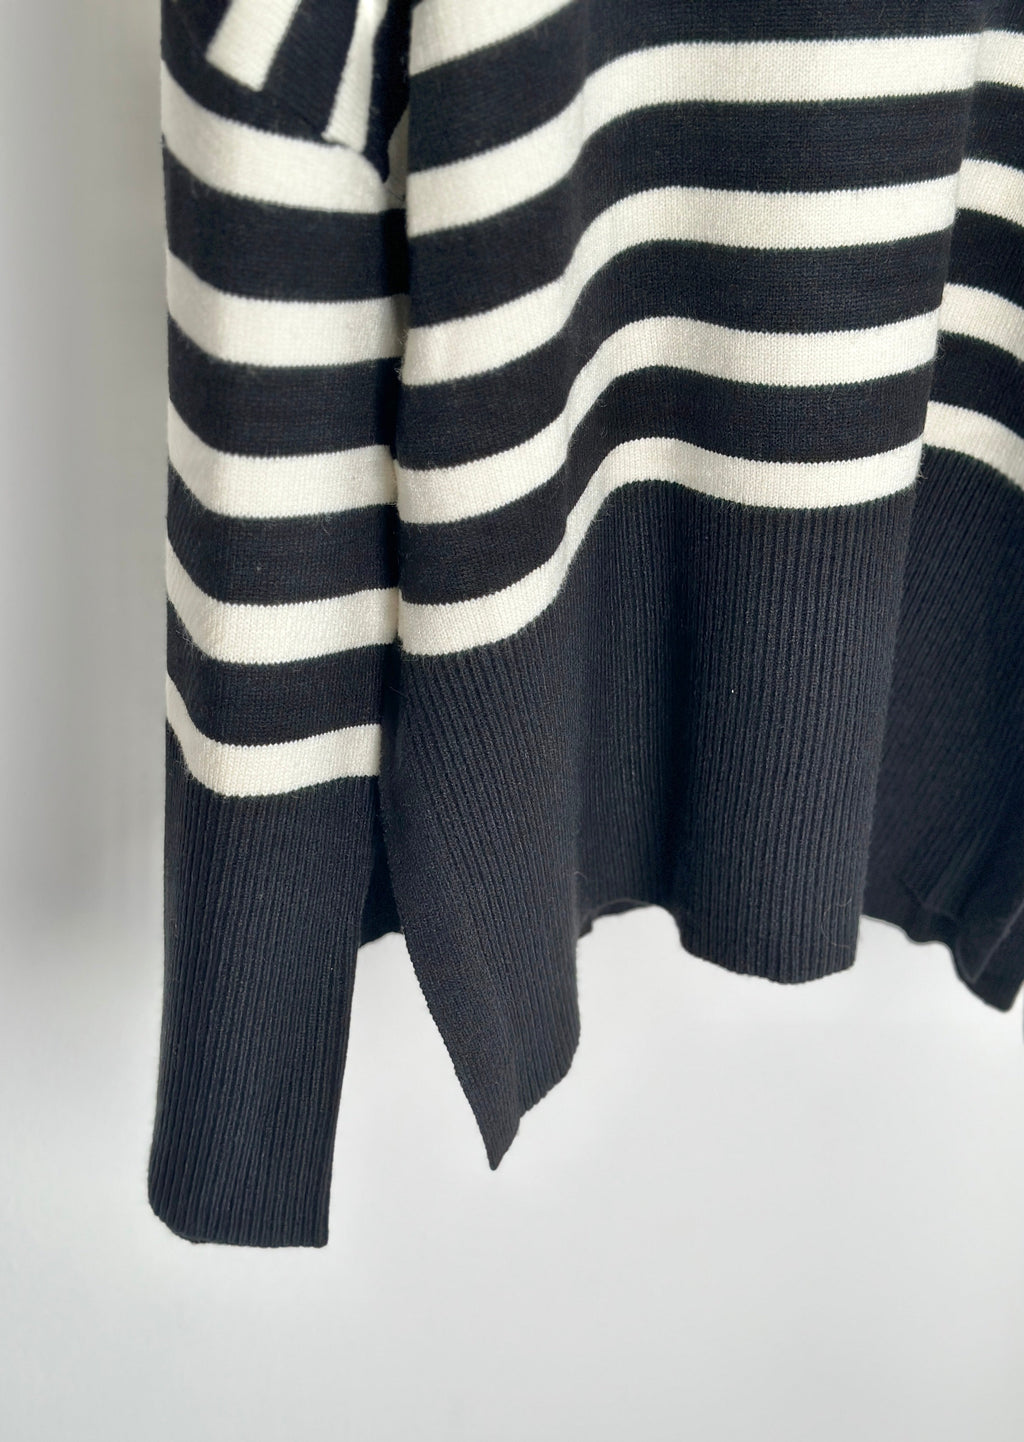 Rollkragen Pullover "Nilla" - Stripes - Black/White